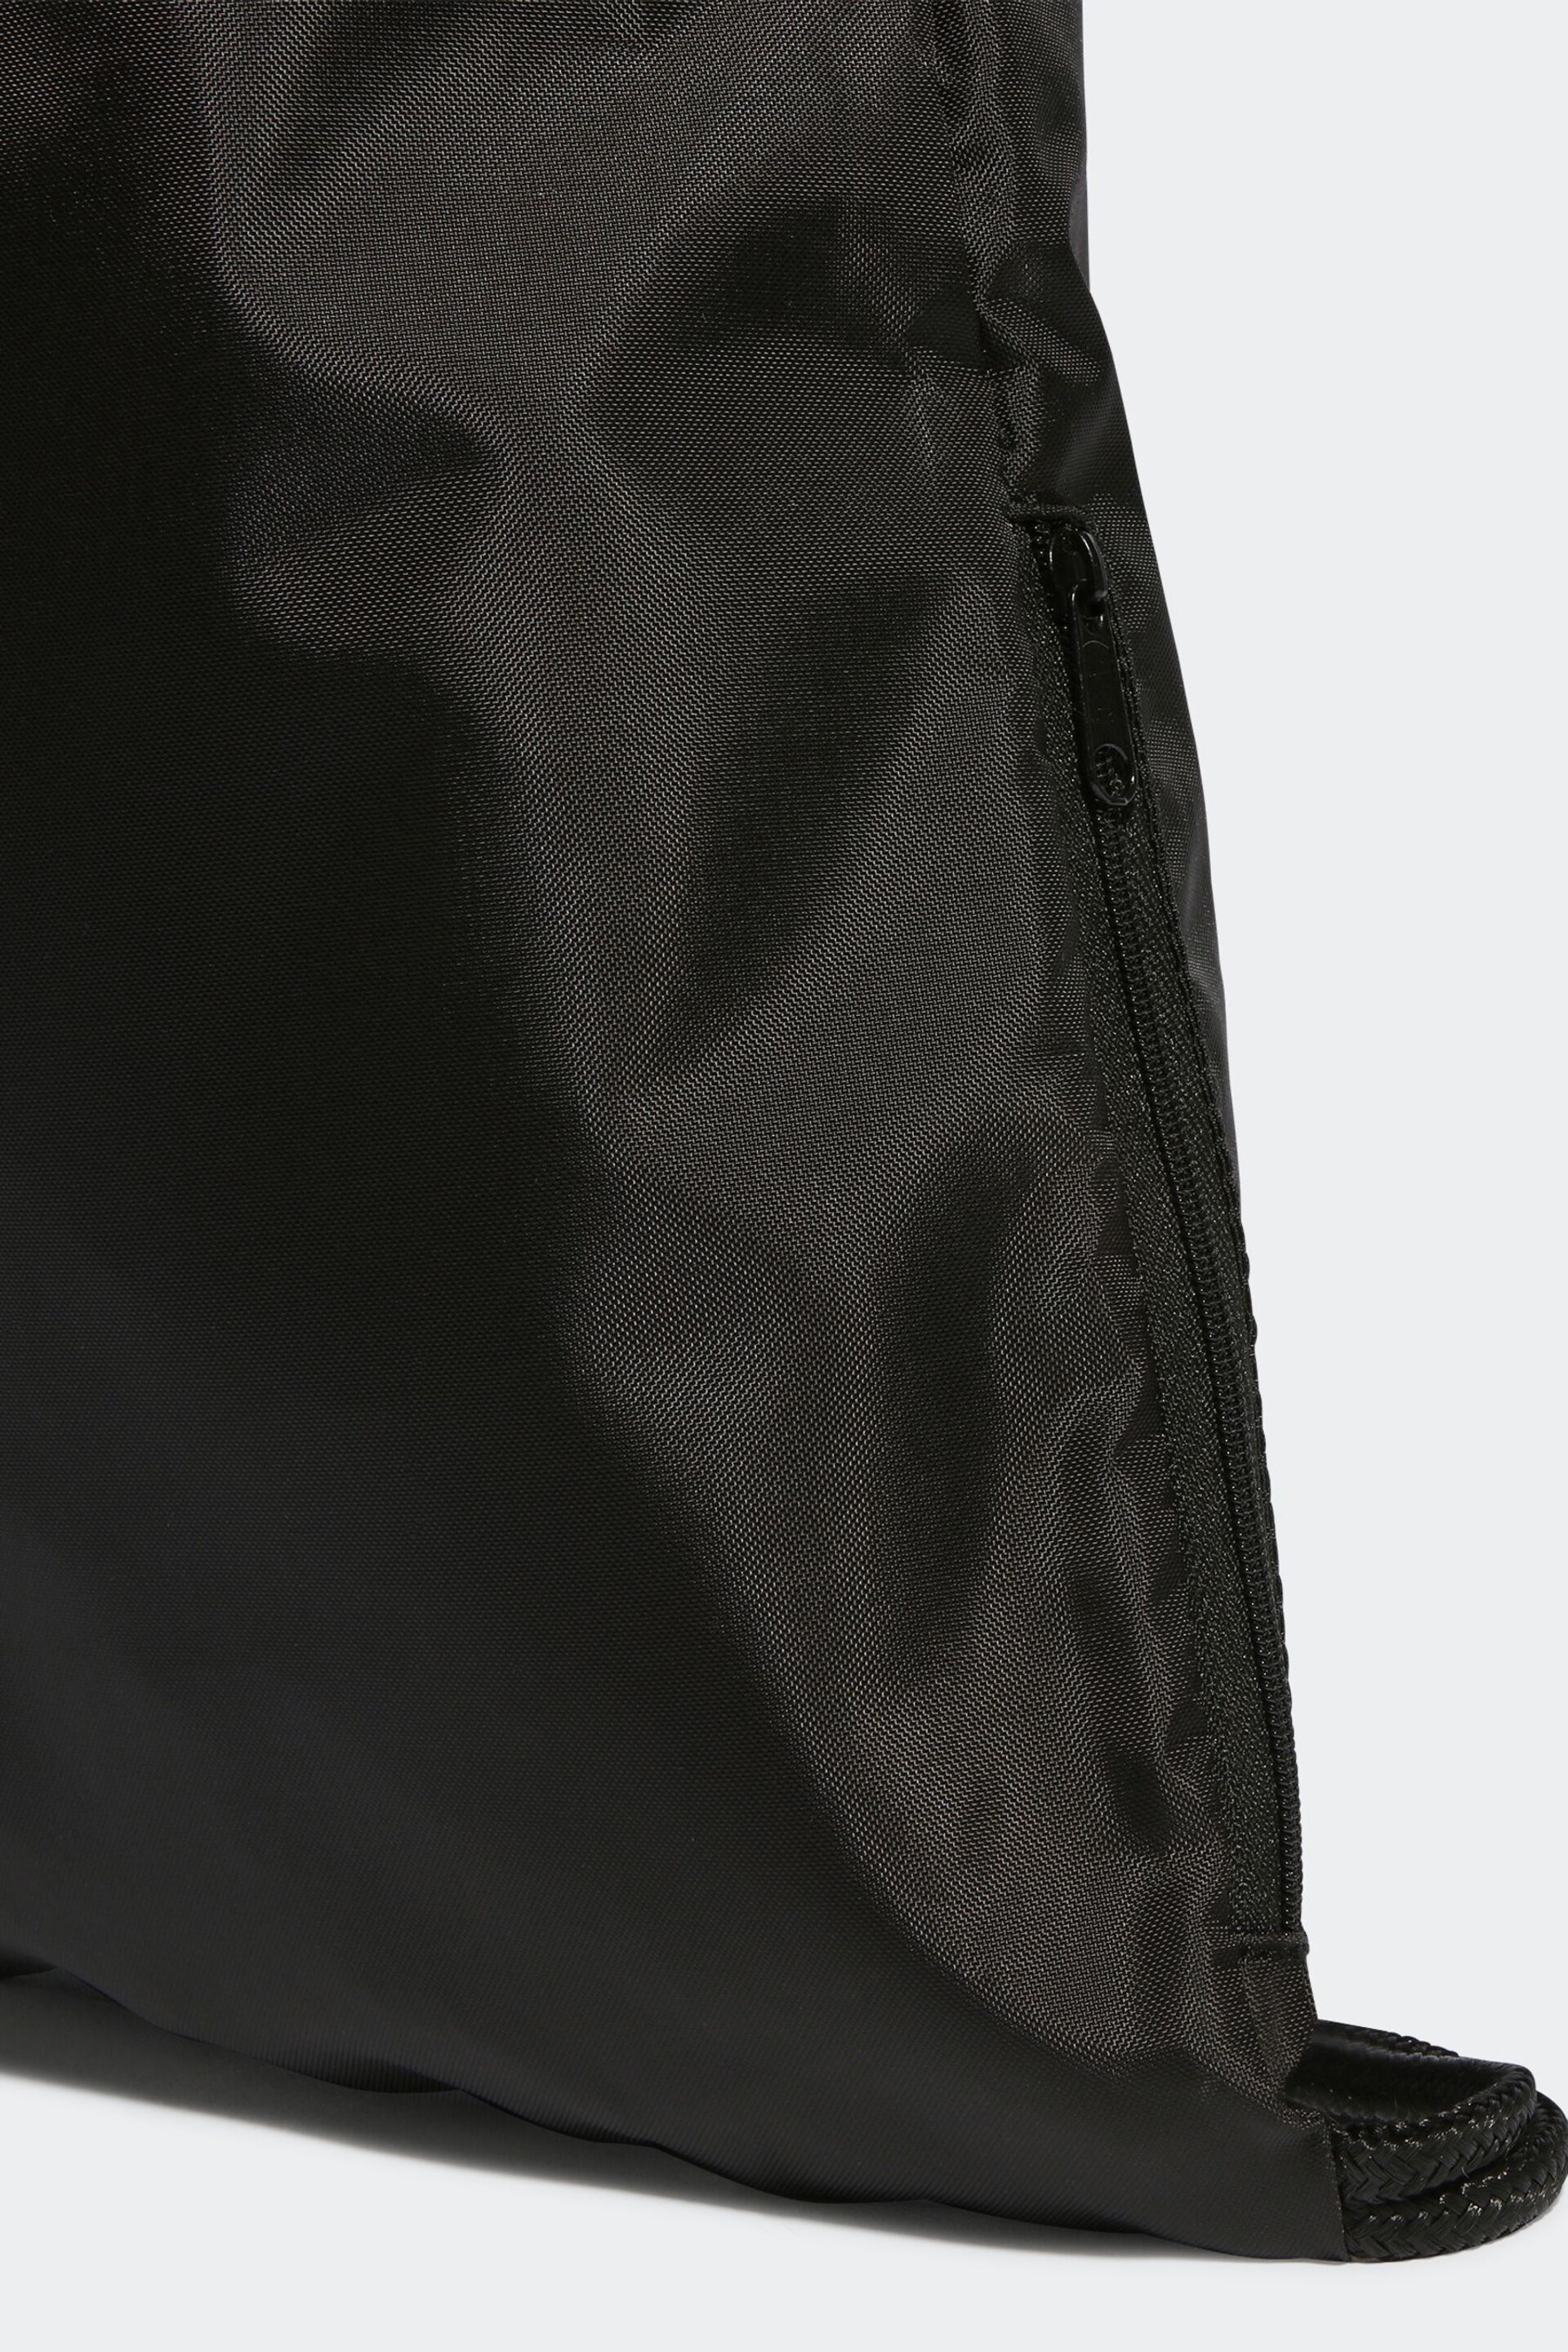 adidas Black/White Performance Tiro League Gymsack - Image 4 of 4